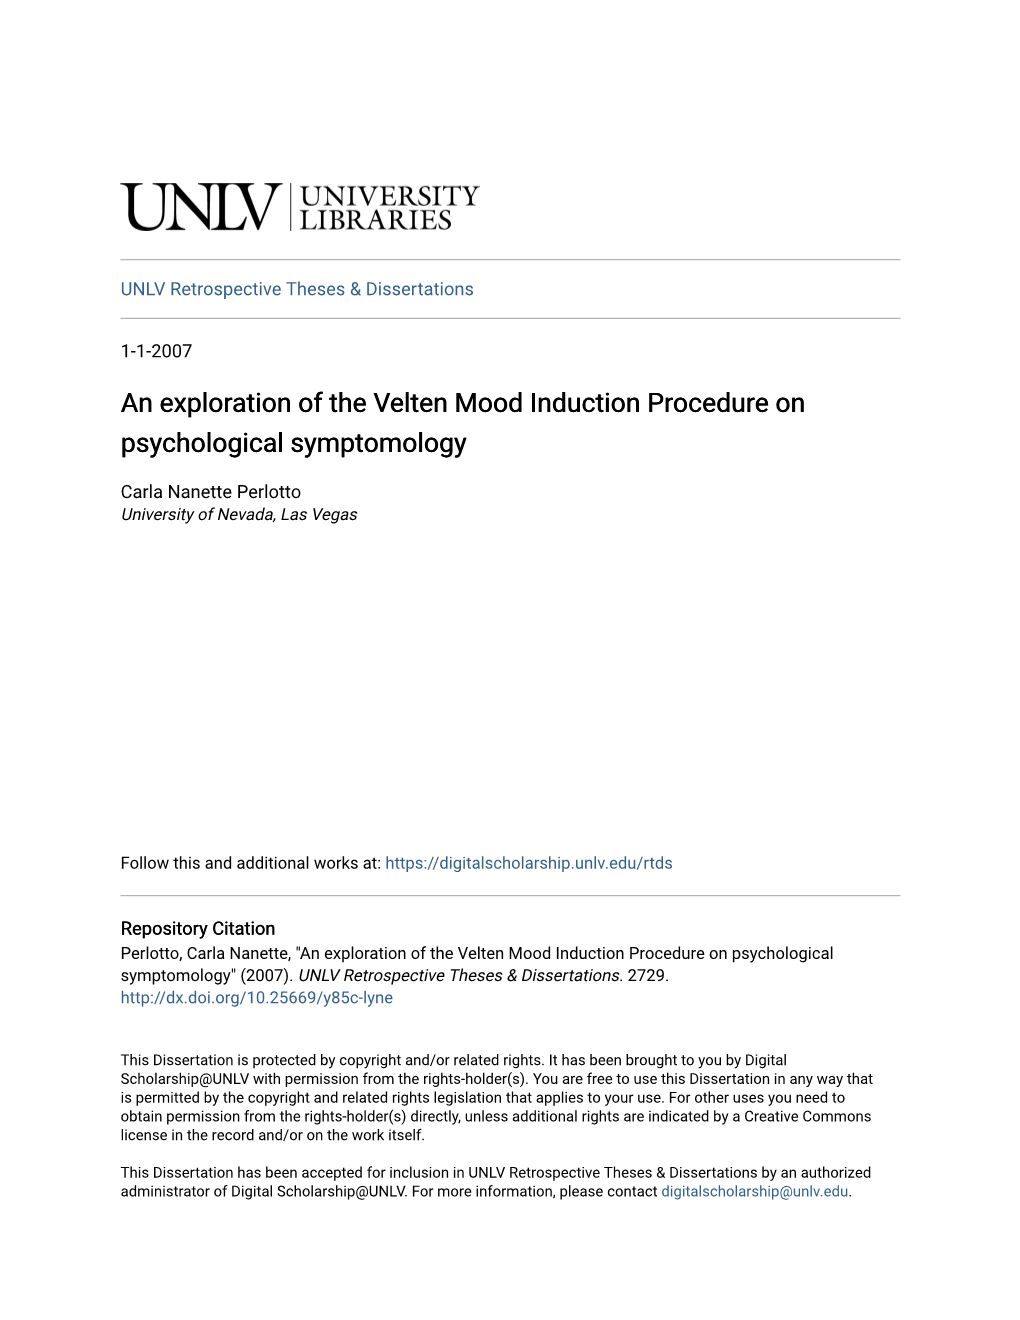 An Exploration of the Velten Mood Induction Procedure on Psychological Symptomology